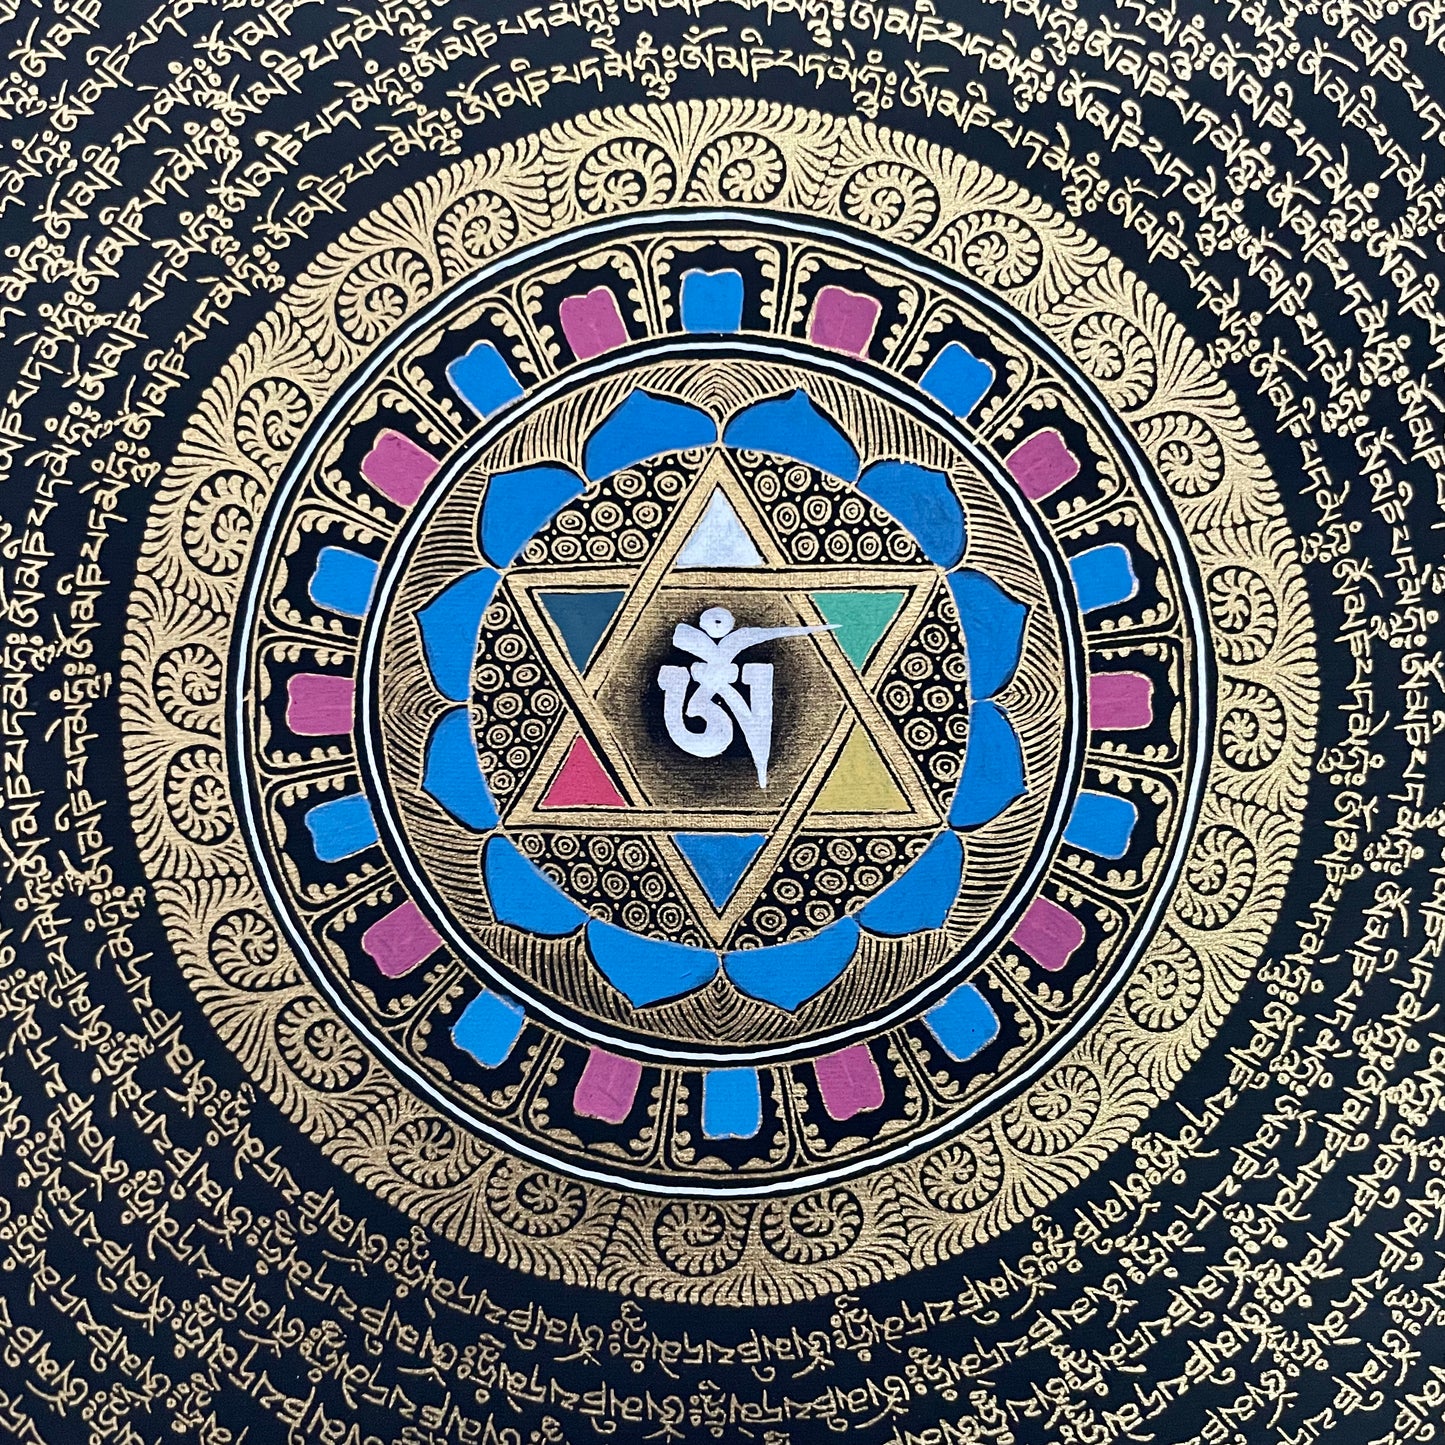 Vibrant Compassion Mantra Mandala #5